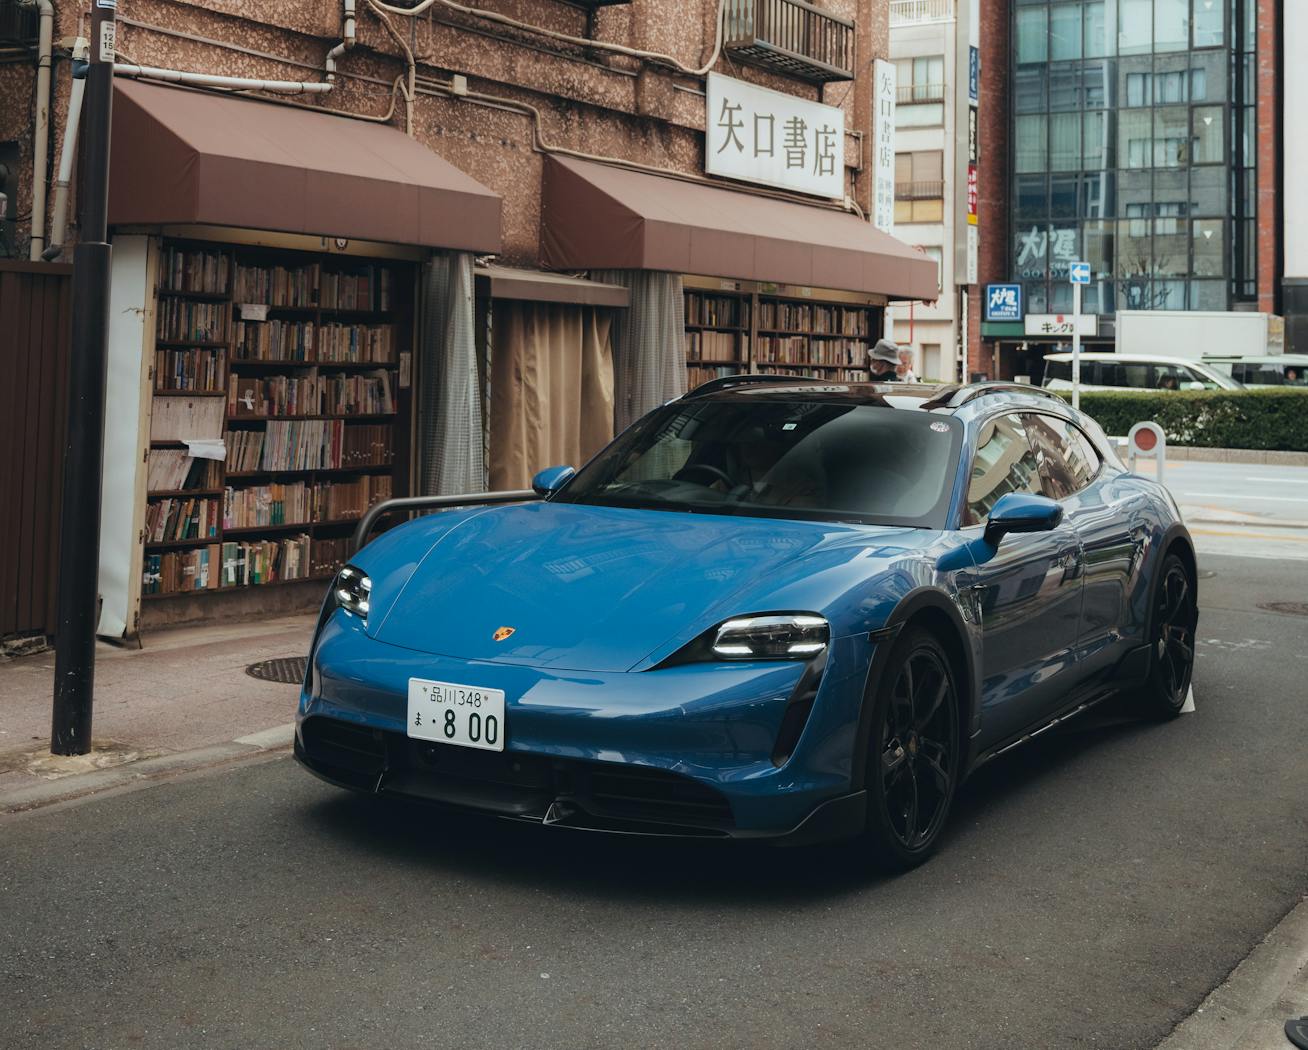 Porsche Taycan Turbo Cross Turismo in front of Tokyo bookshop